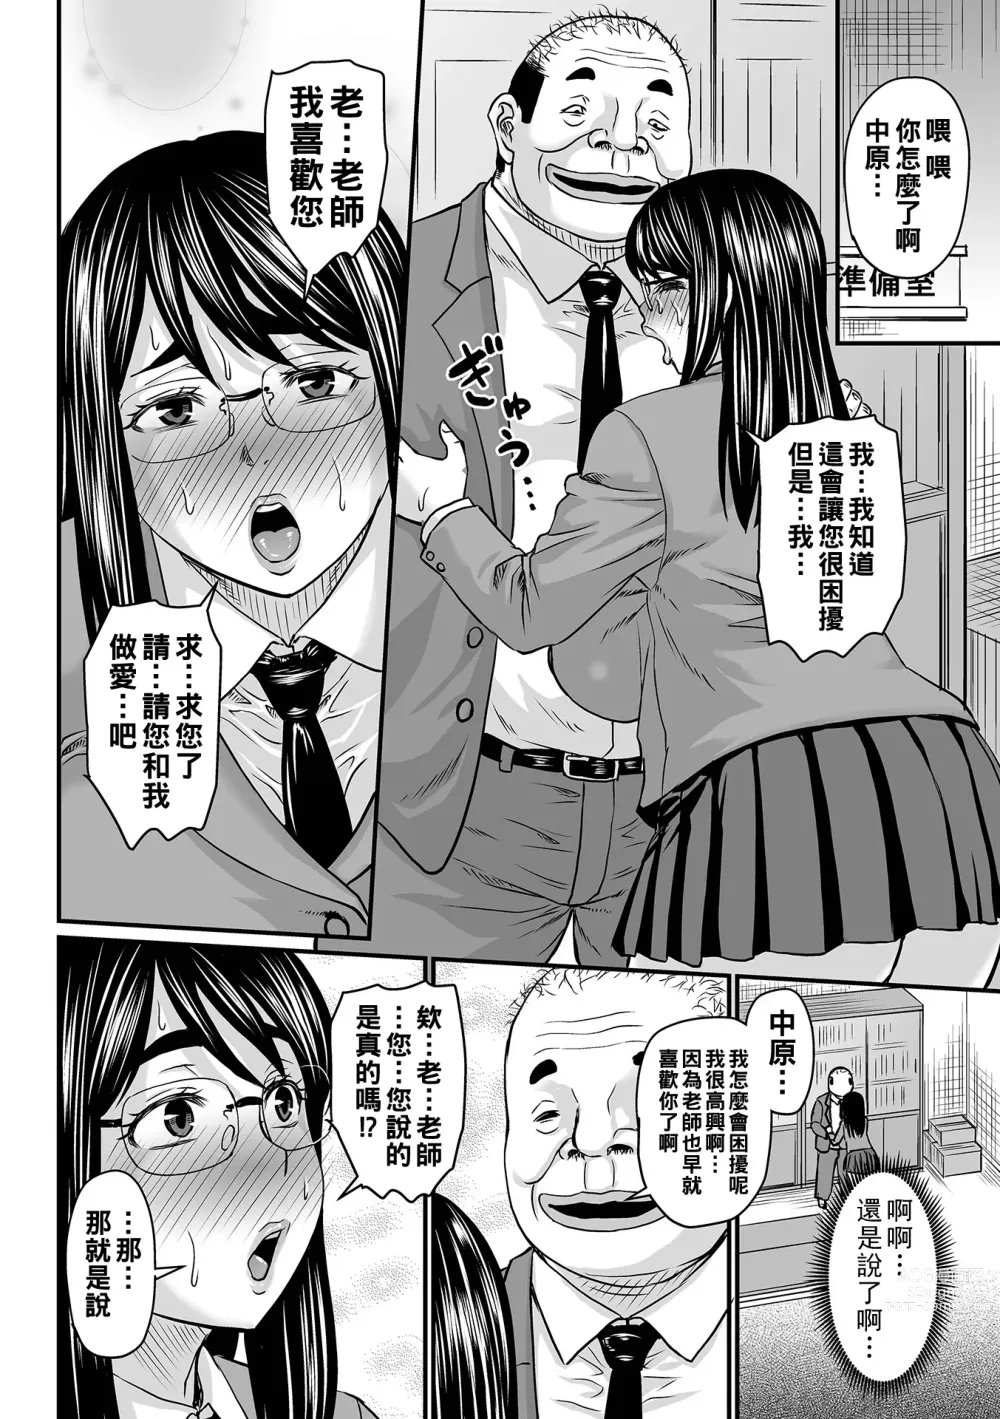 Page 29 of manga Yokubou Kanaeru Kiseki no......